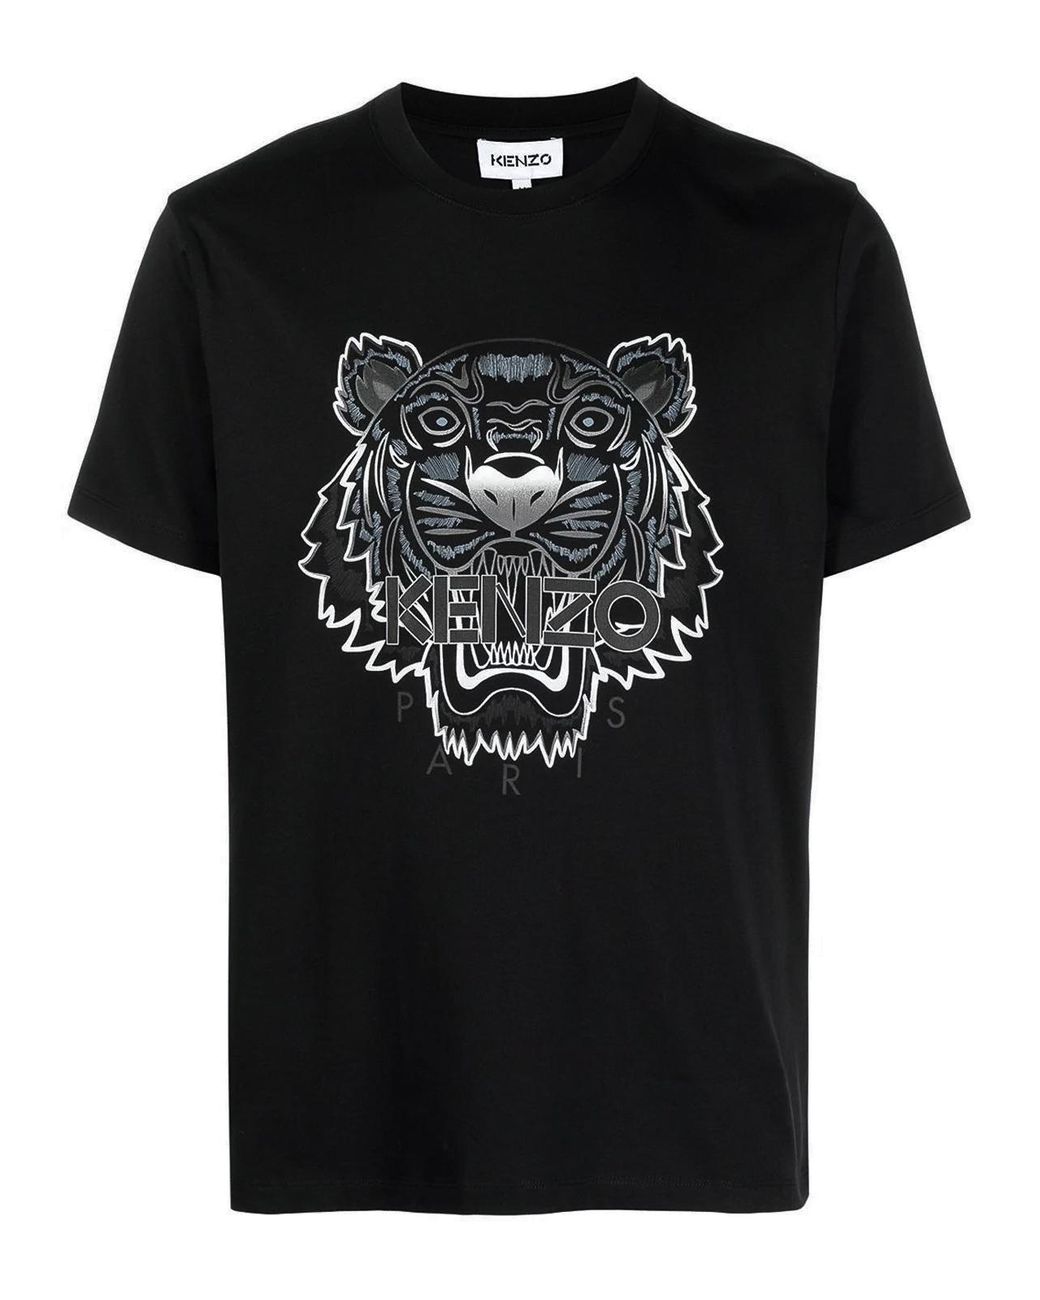 KENZO Tiger T-shirt in Black for Men - Lyst